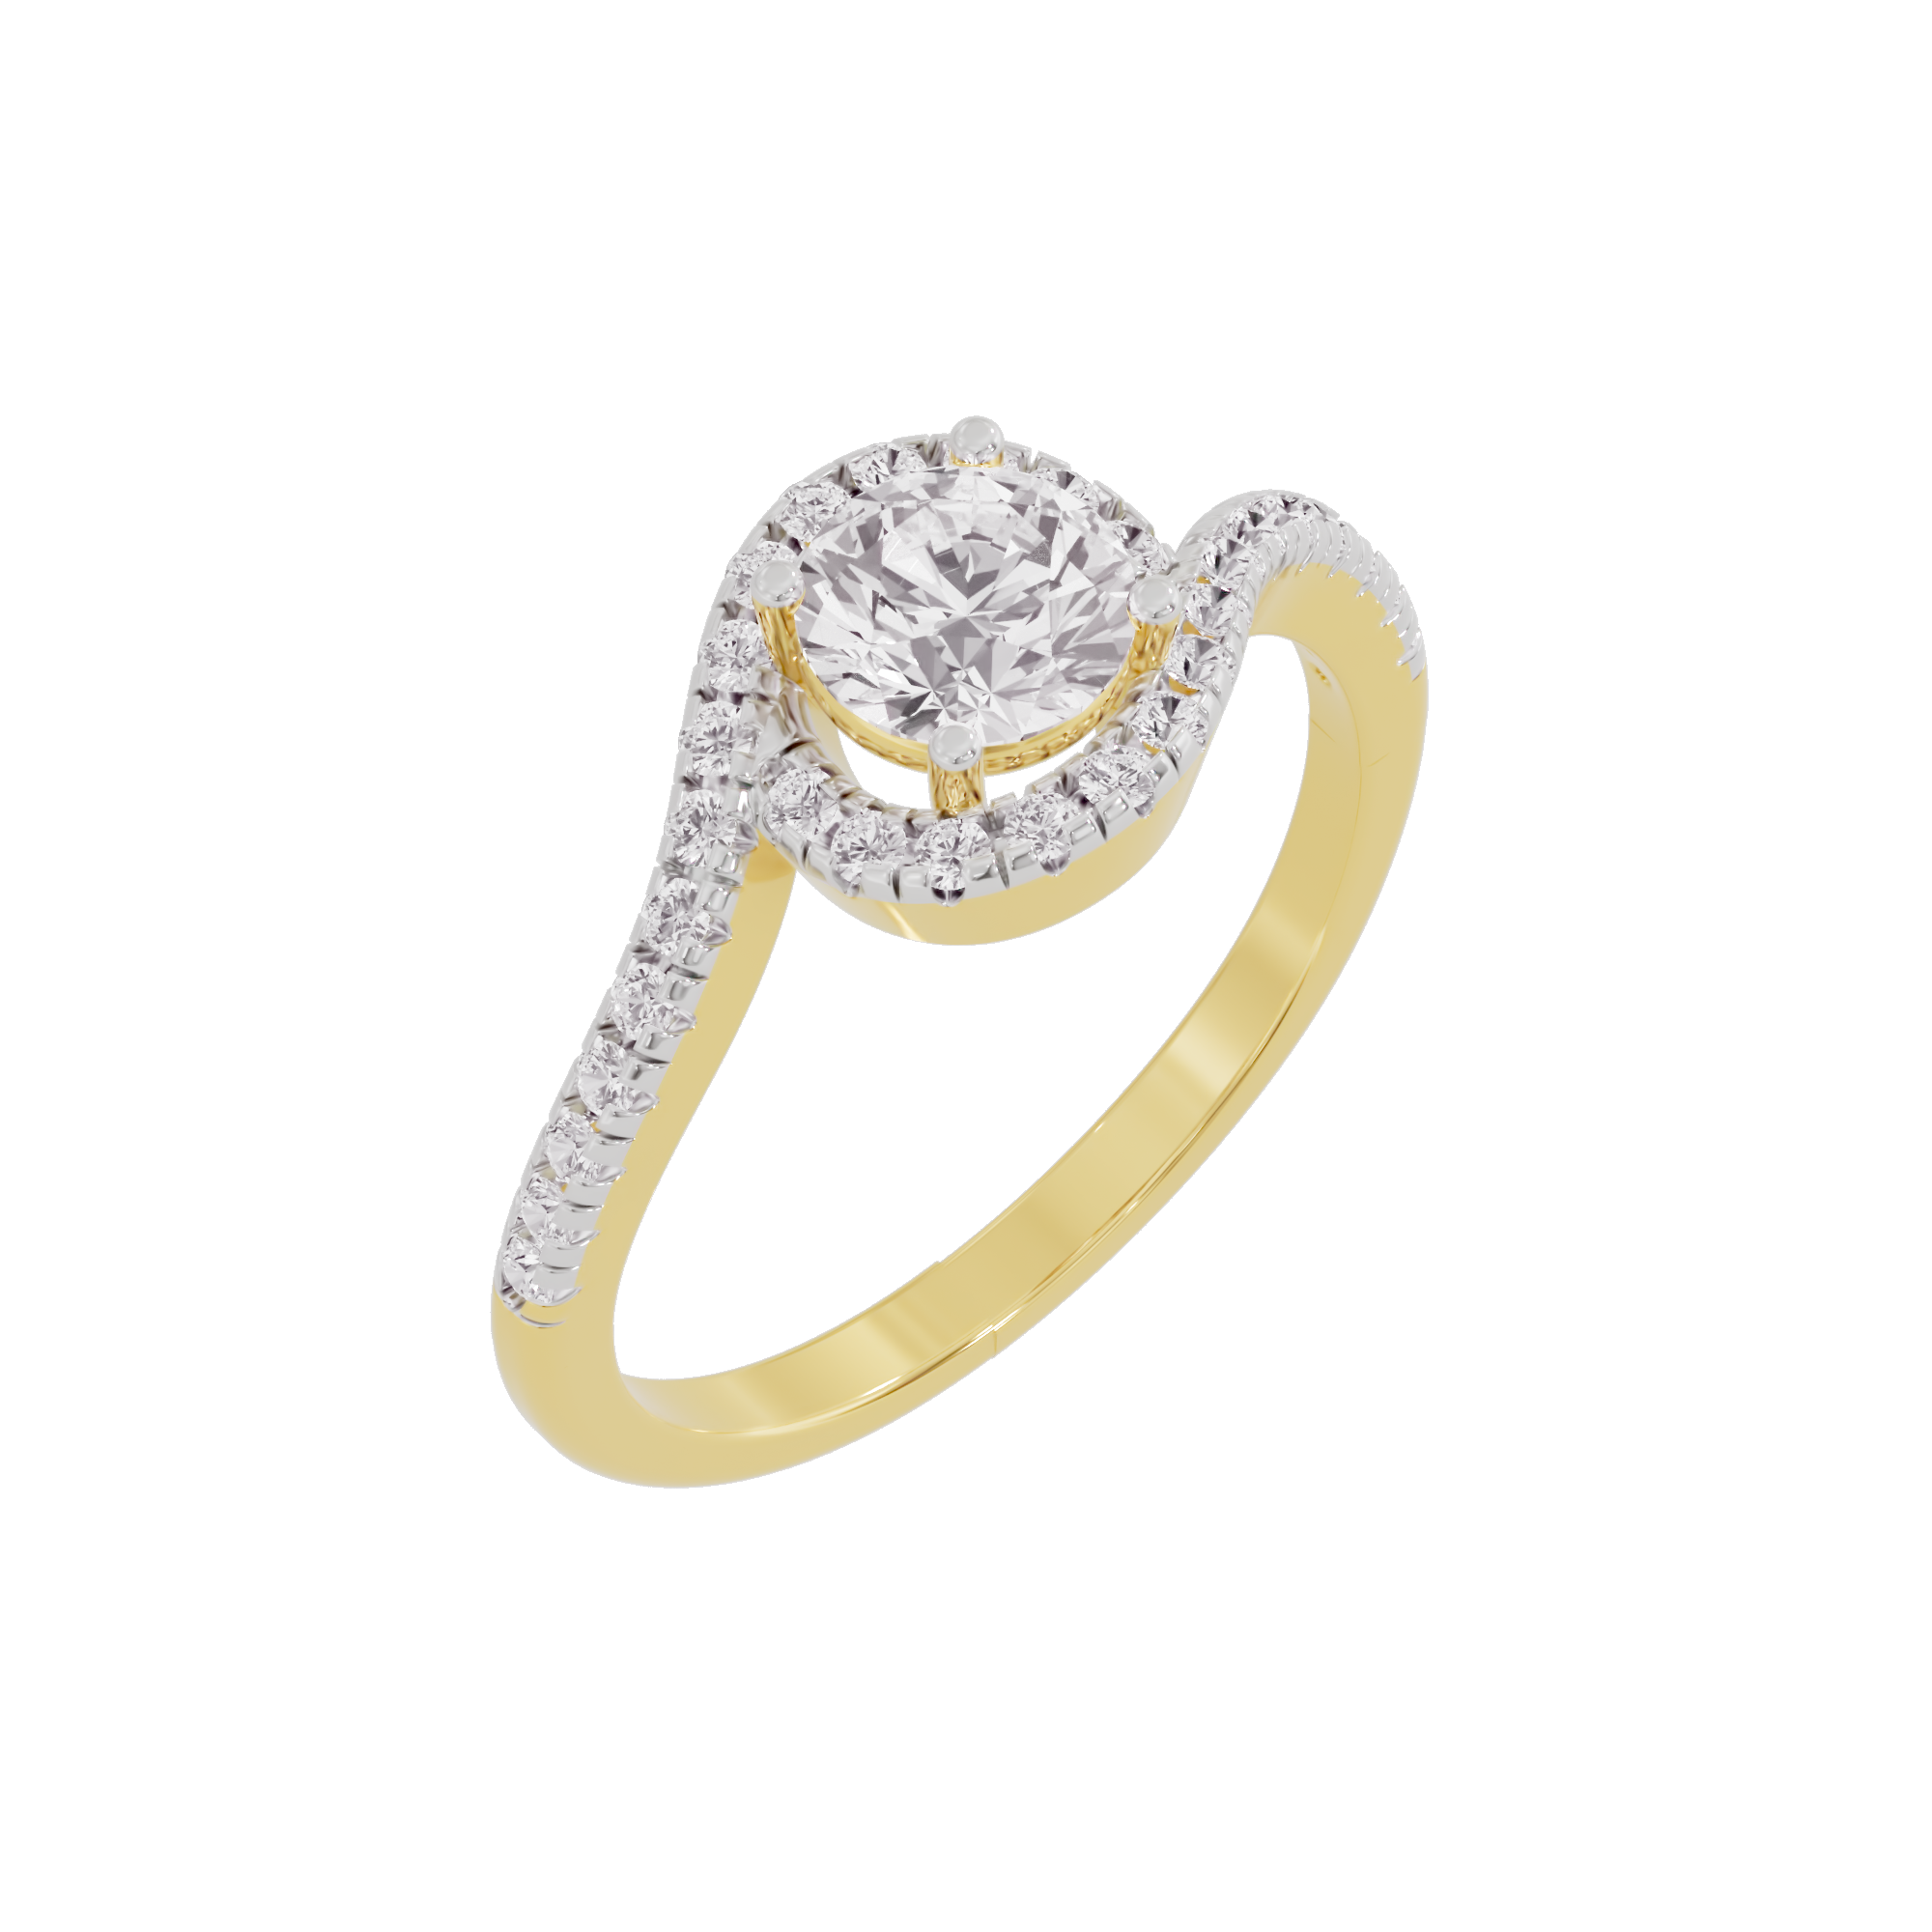 Starry Serenity Diamond Ring